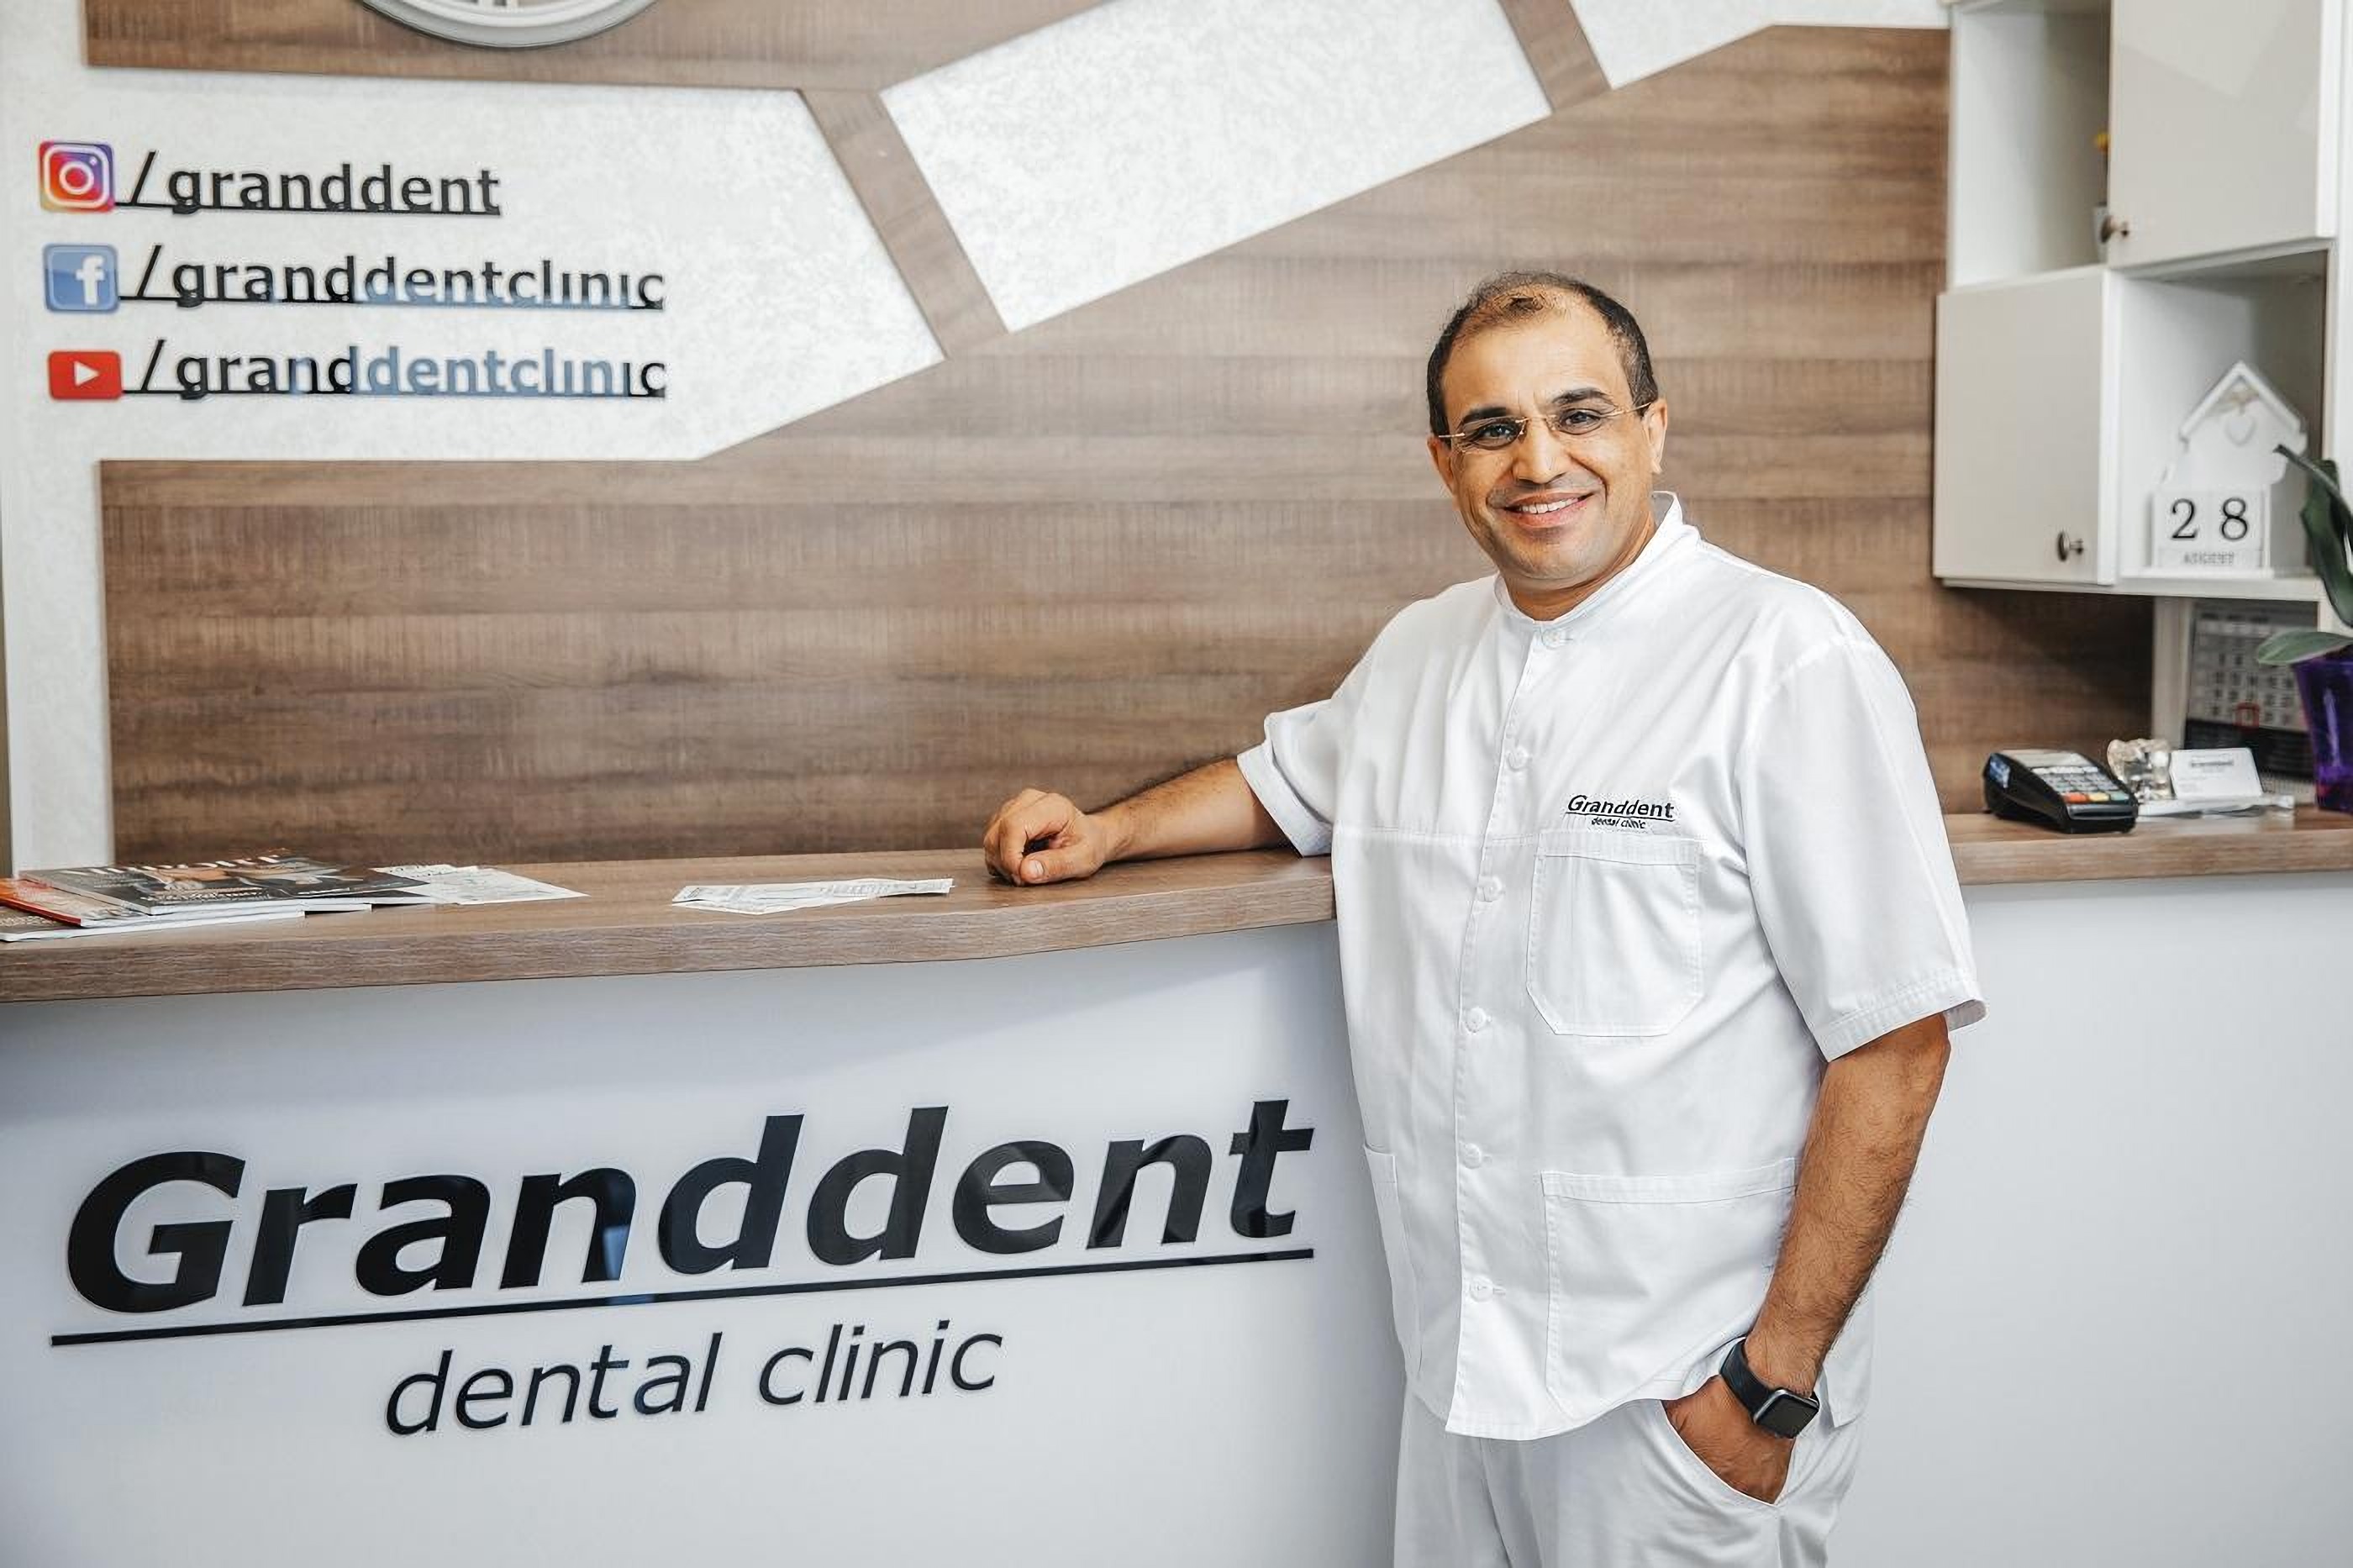 Head of Granddent Dental Clinic in Odessa